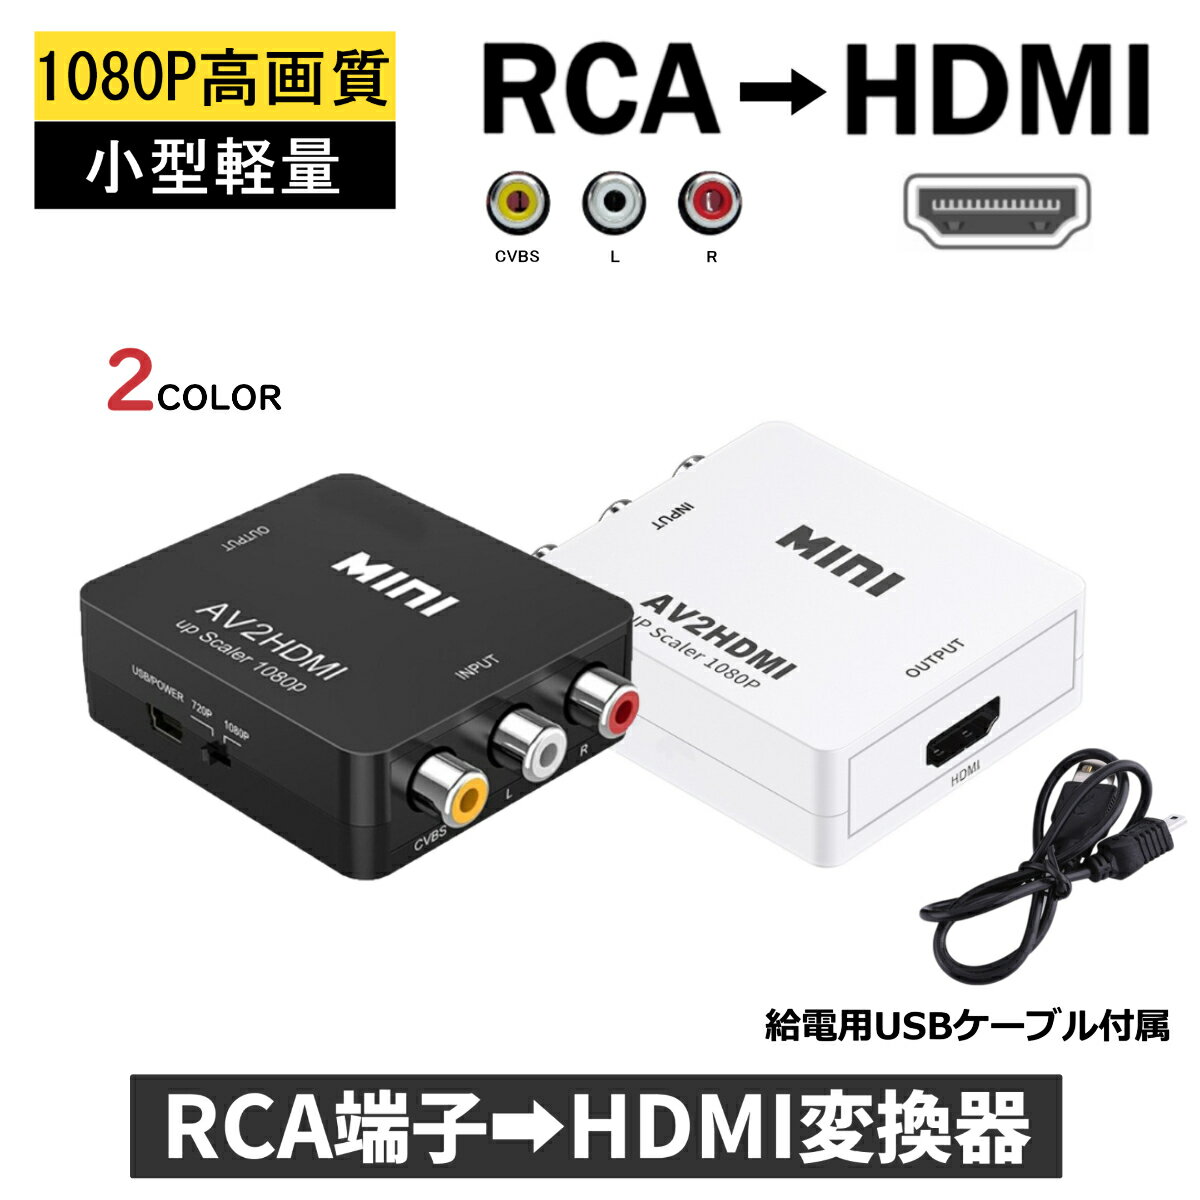 RCA HDMI 変換器 切替器 変換 給電用USBケーブル付き コンポジット AV2HDMI RCA to HDMI変換アダプタ ダウンコンバーター アナログ端子 テレビ AVケーブル 送料無料